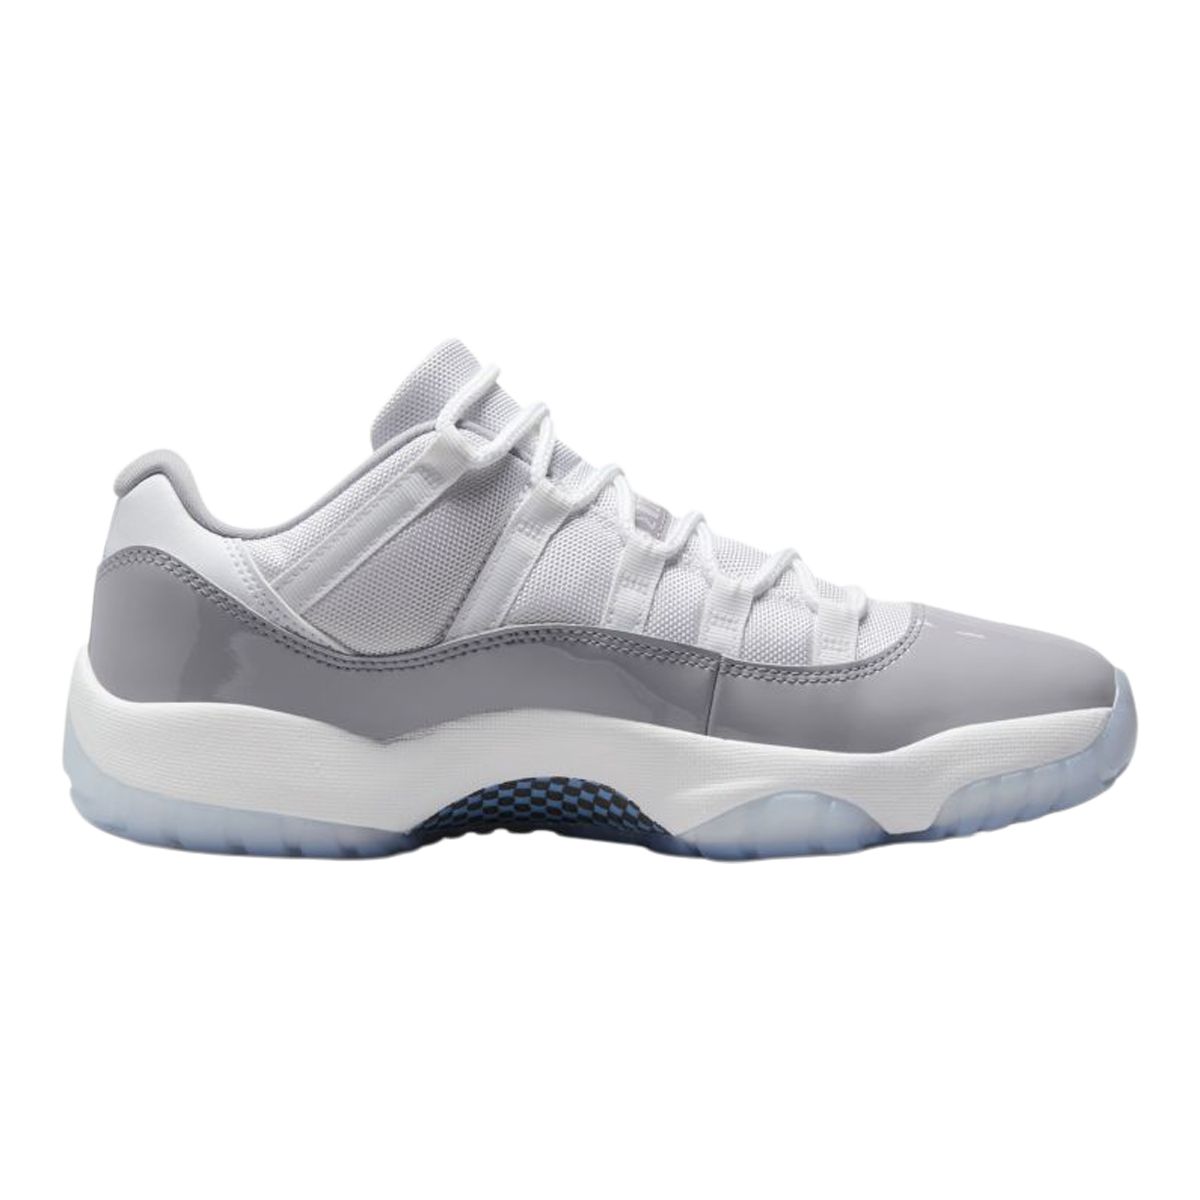 Nike Men's/Women's Jordan 11 Retro Cement Grey Basketball Shoes 